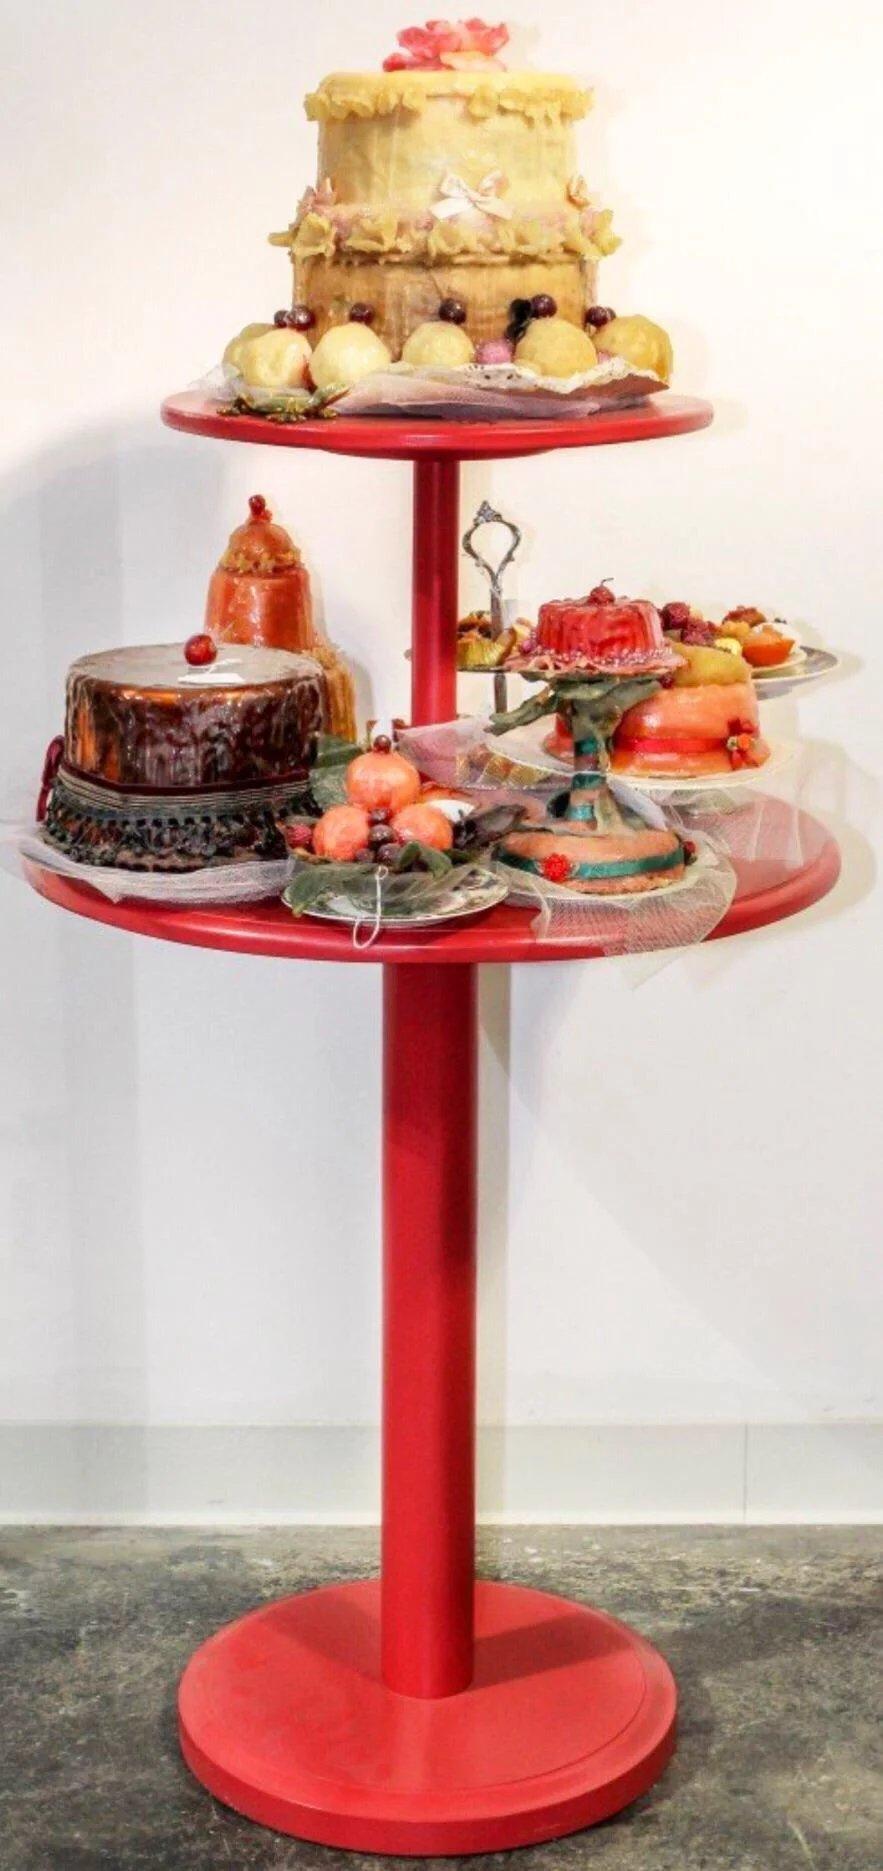 British Pop Art Cake & Candy Mixed Media Mid-Century Post-Modern Sculpture Red Pedestal